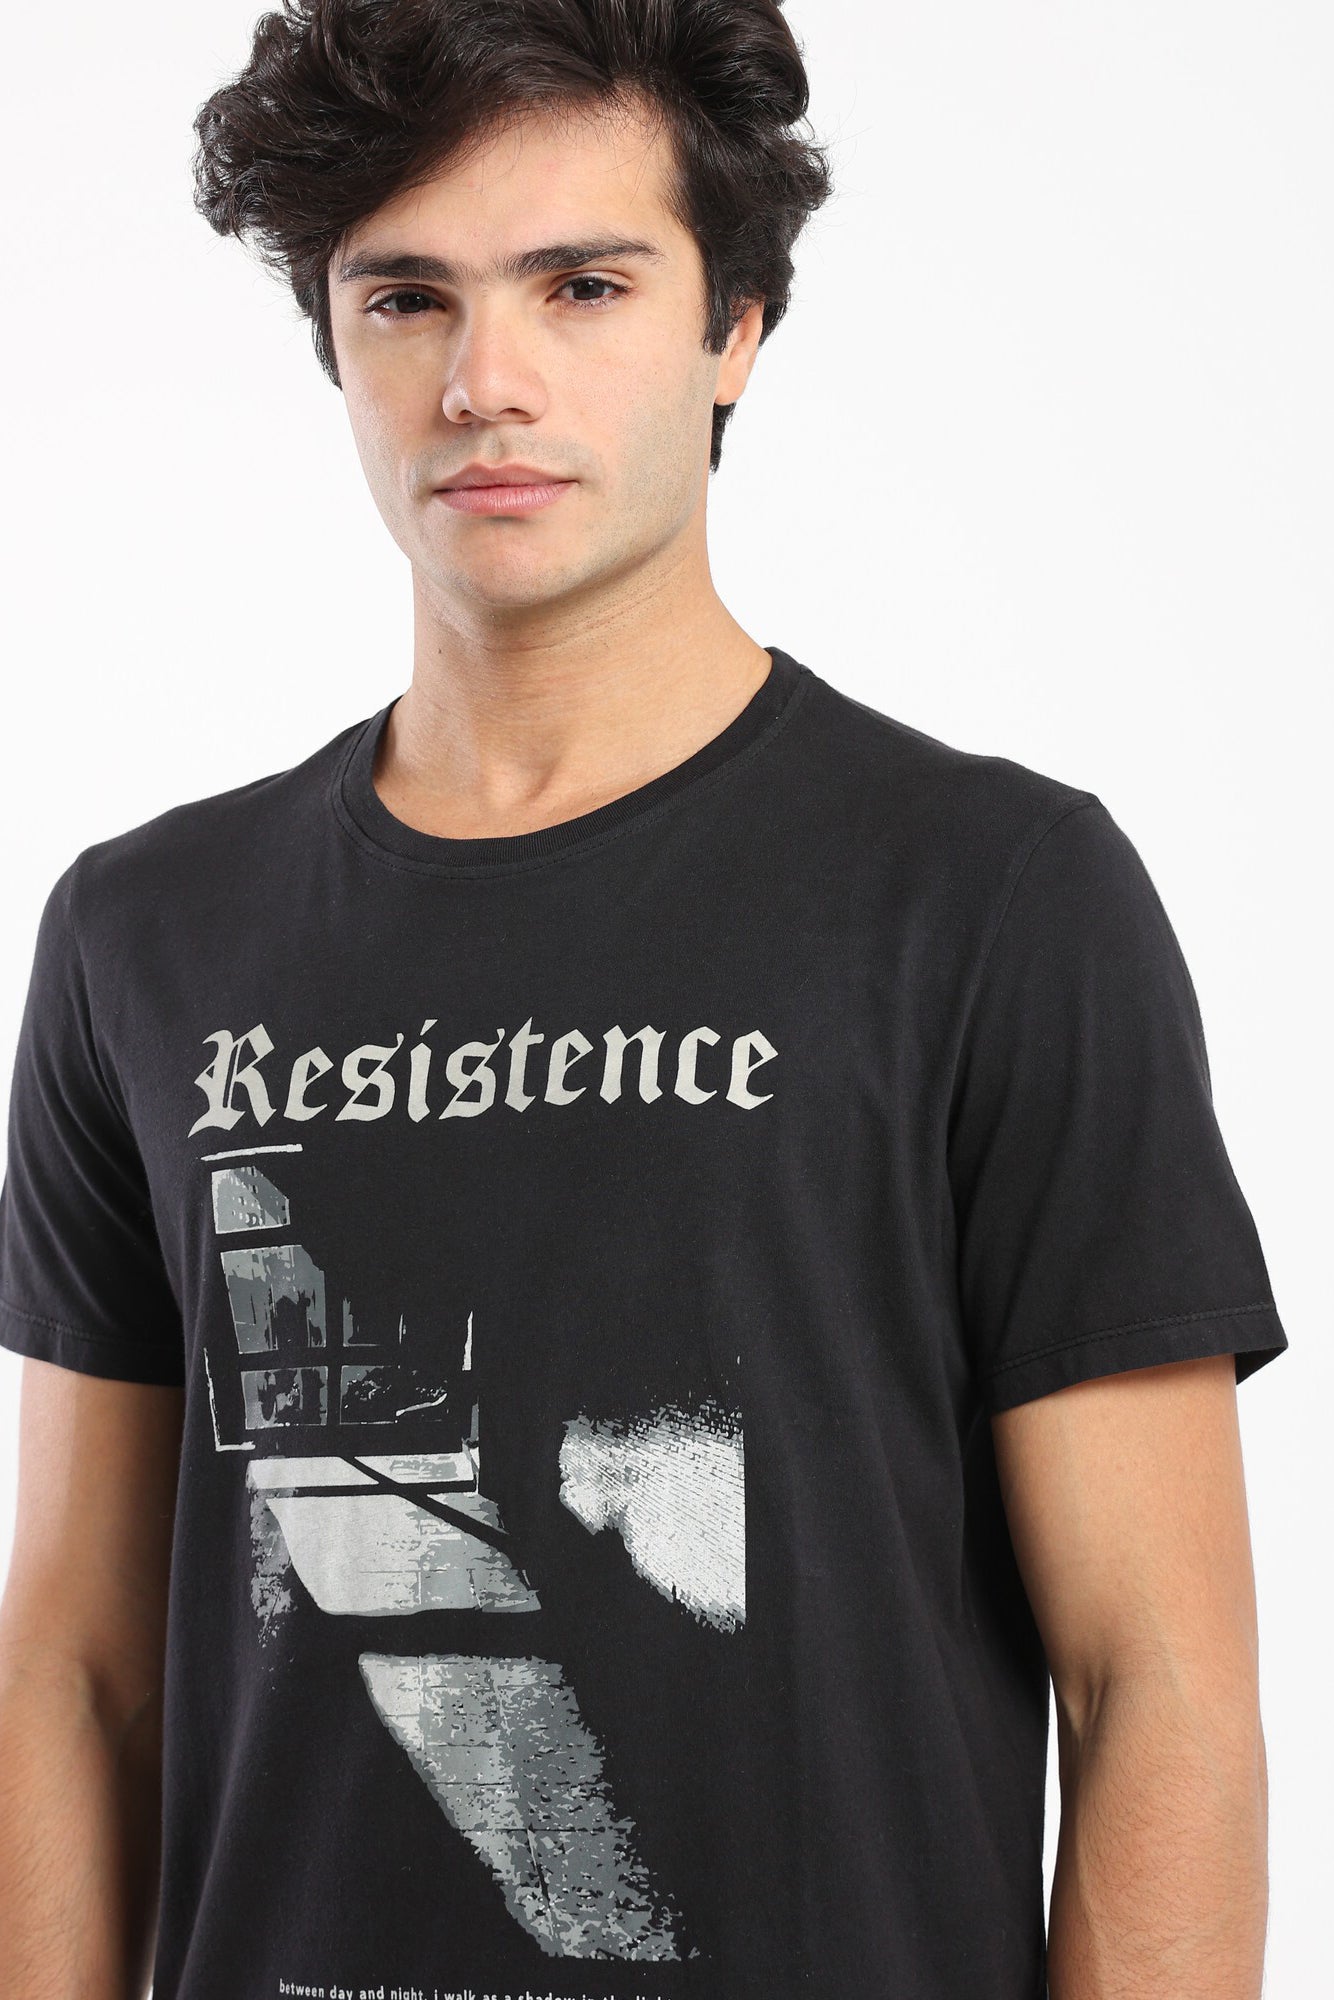 T-Shirt - "Resistance" Print